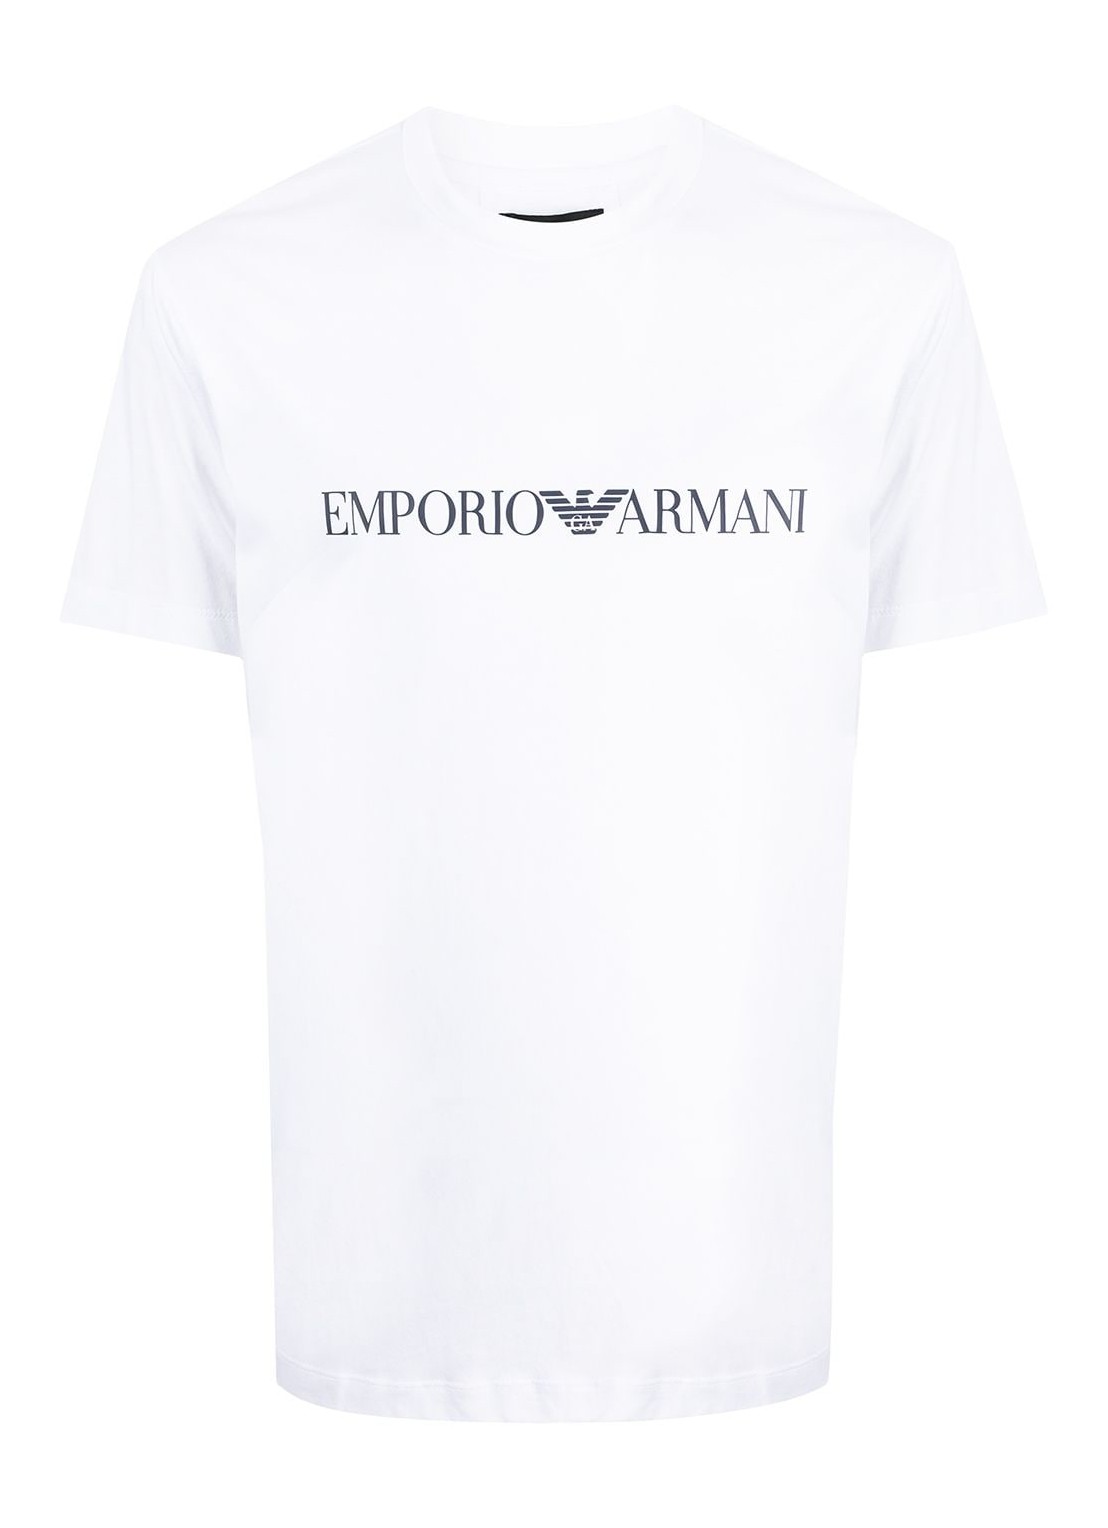 Camiseta emporio armani t-shirt man 8n1tn51jpzz 8n1tn51jpzz 0146 talla blanco
 